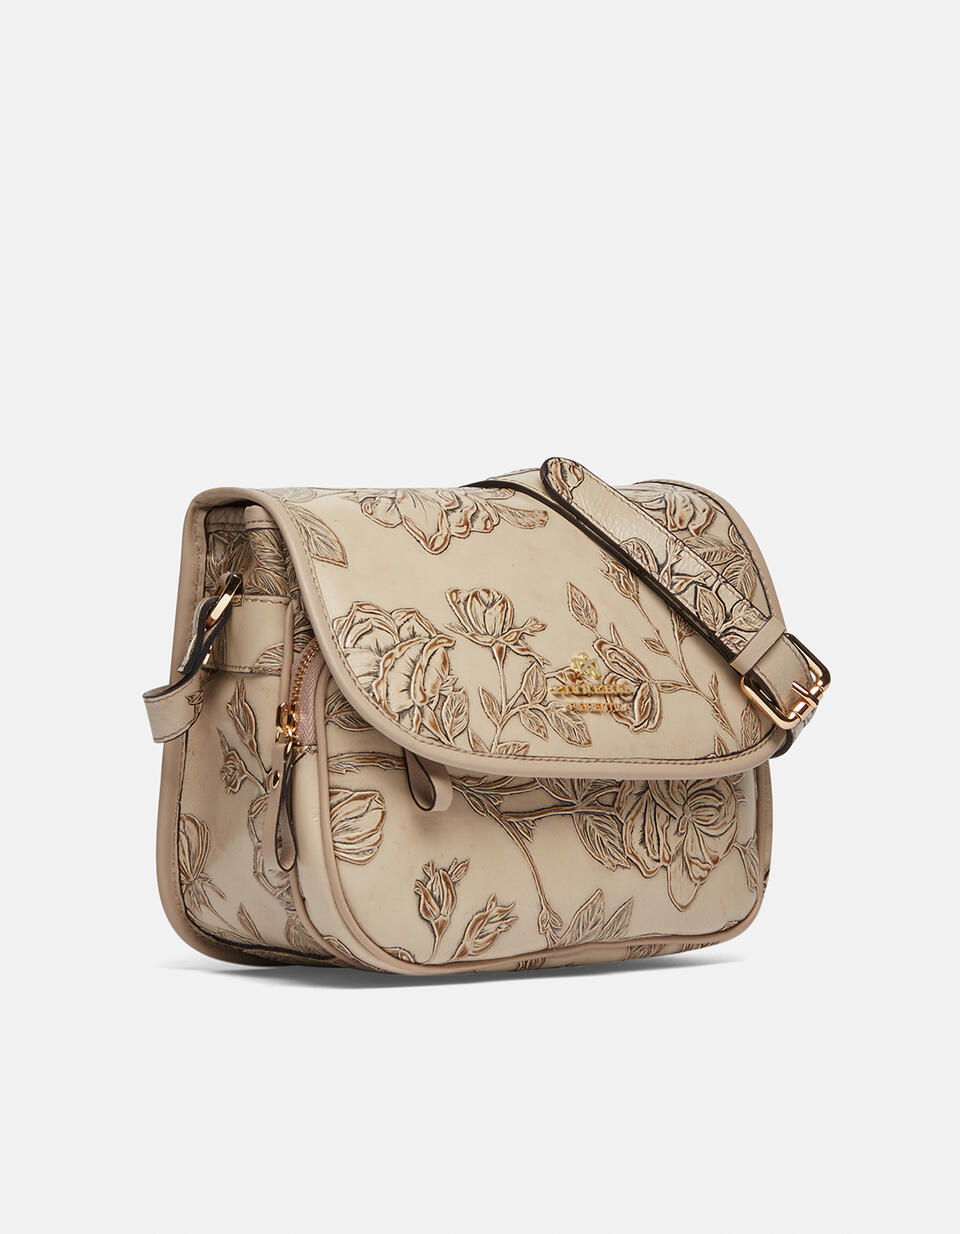 Messenger bag in rose embossed printed calfleather - Messenger Bags - WOMEN'S BAGS | bags Mimì TAUPE - Messenger Bags - WOMEN'S BAGS | bagsCuoieria Fiorentina